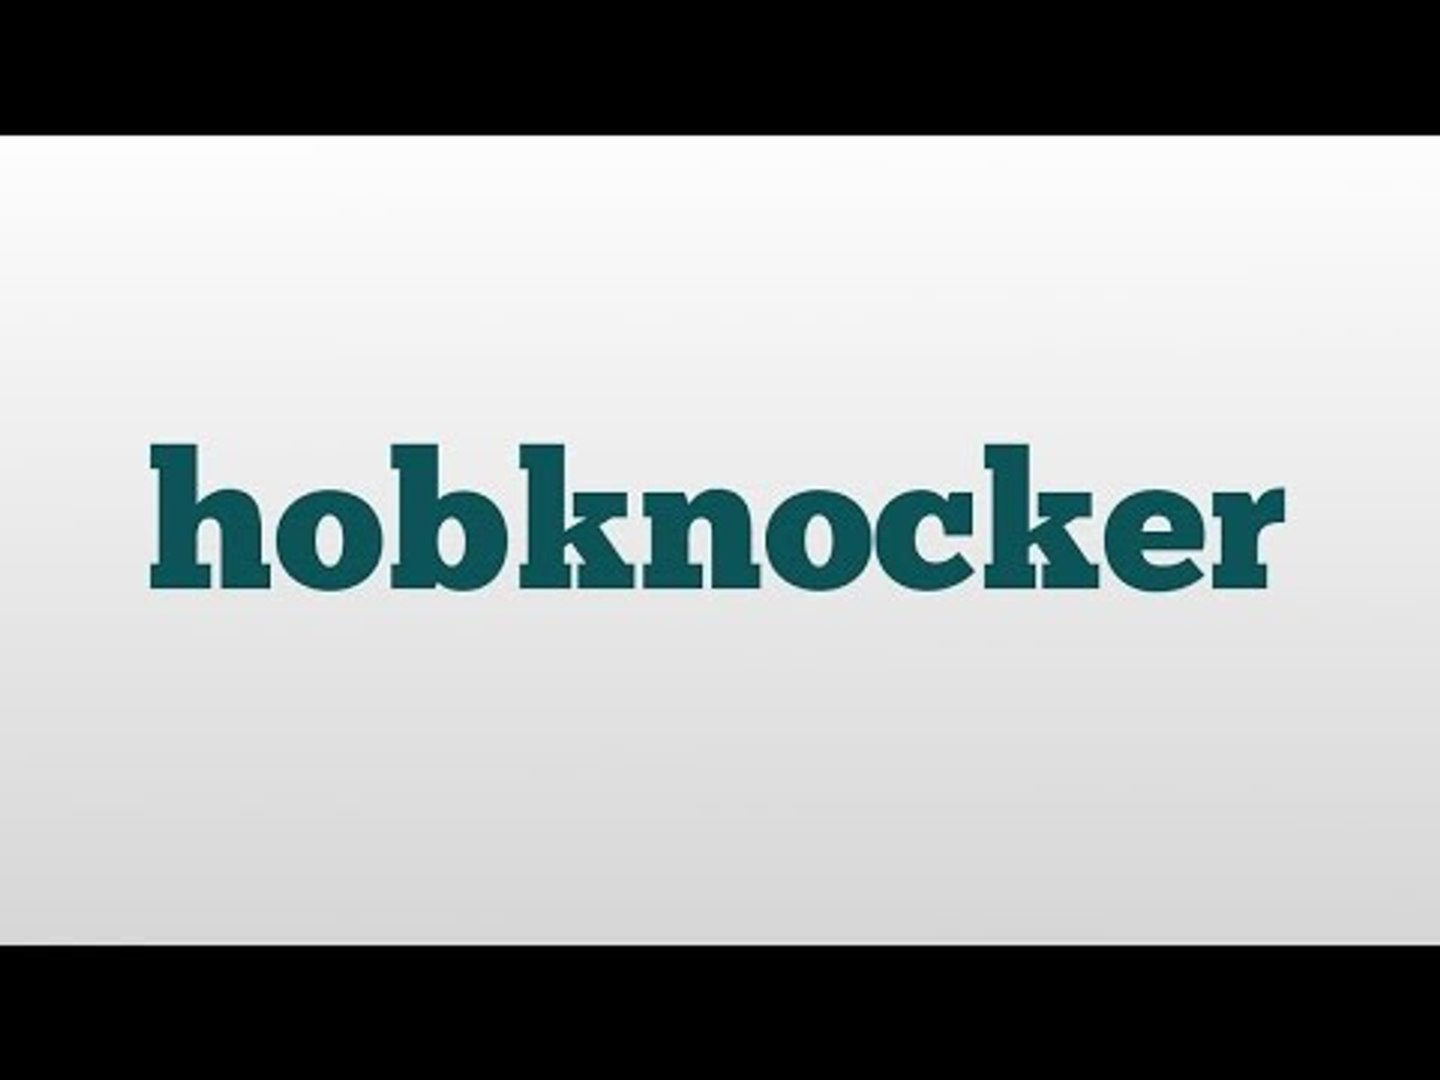 allen d brown recommends What Is A Hobknocker